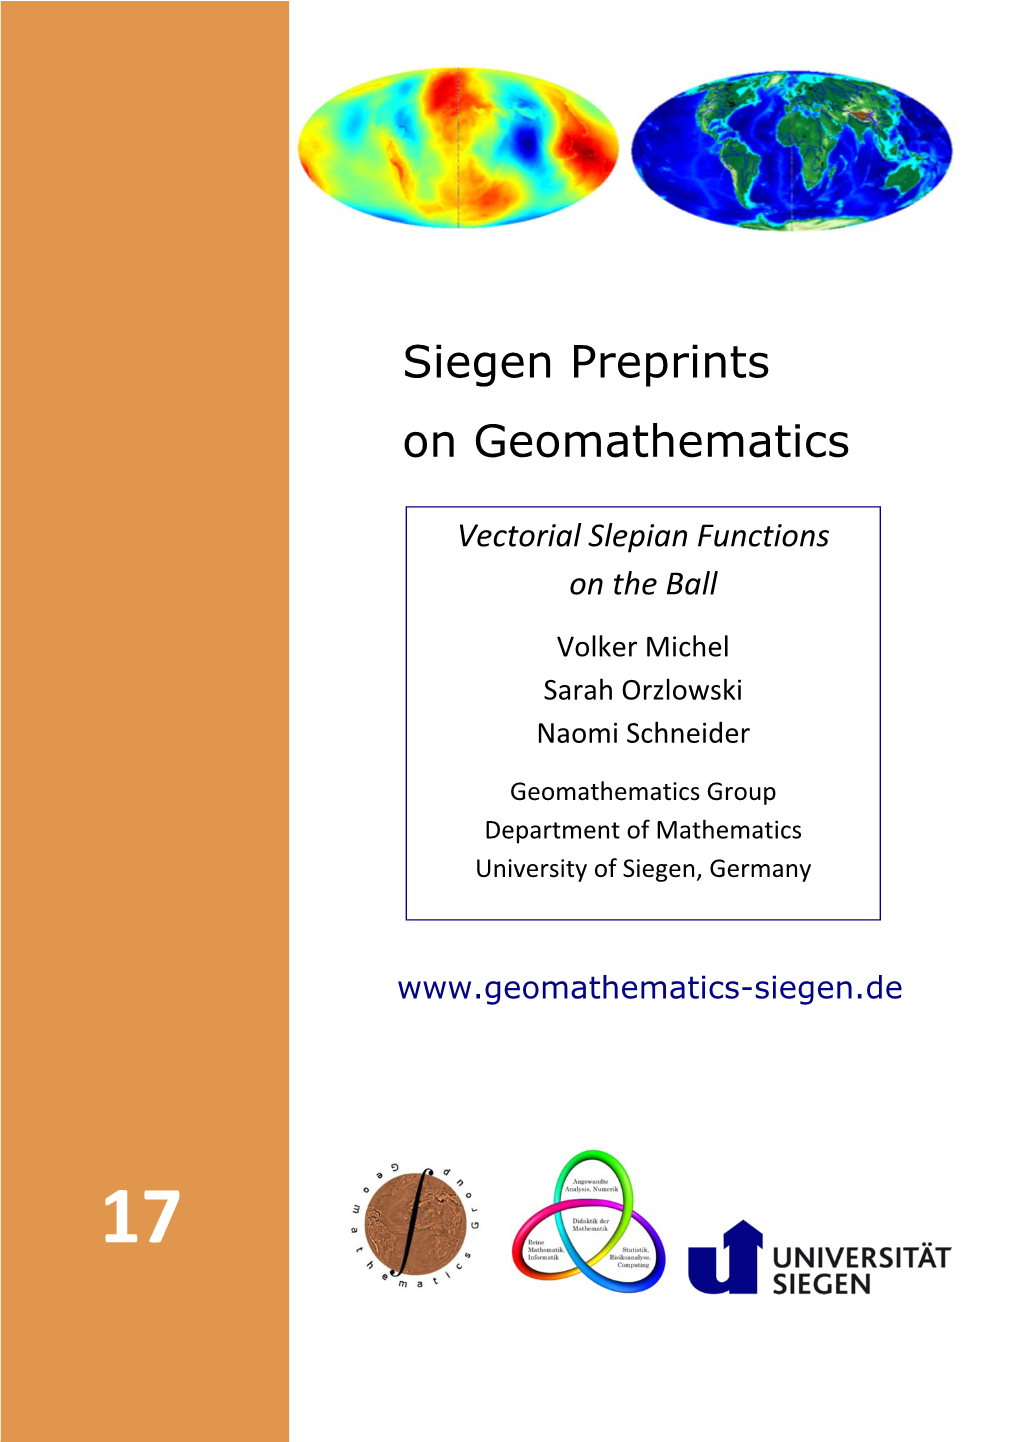 Siegen Preprints on Geomathematics